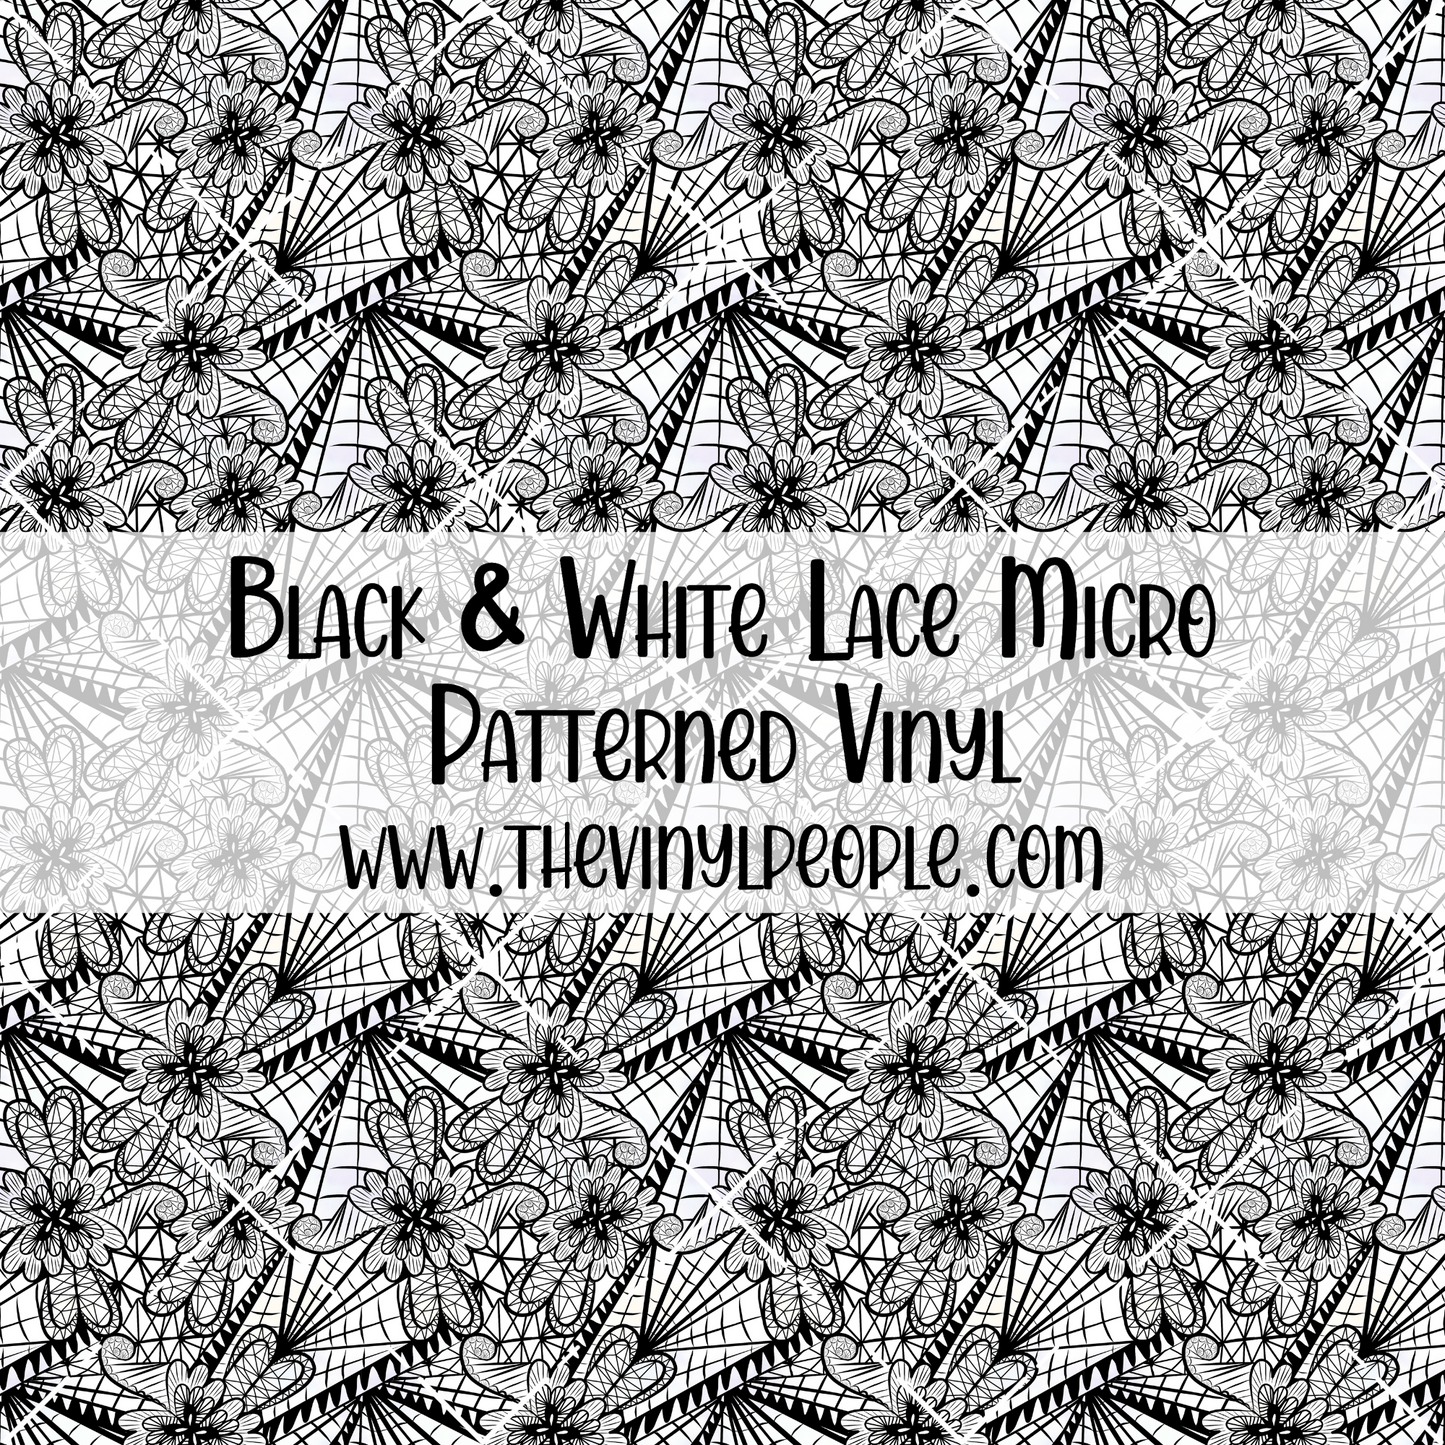 Black & White Lace Patterned Vinyl